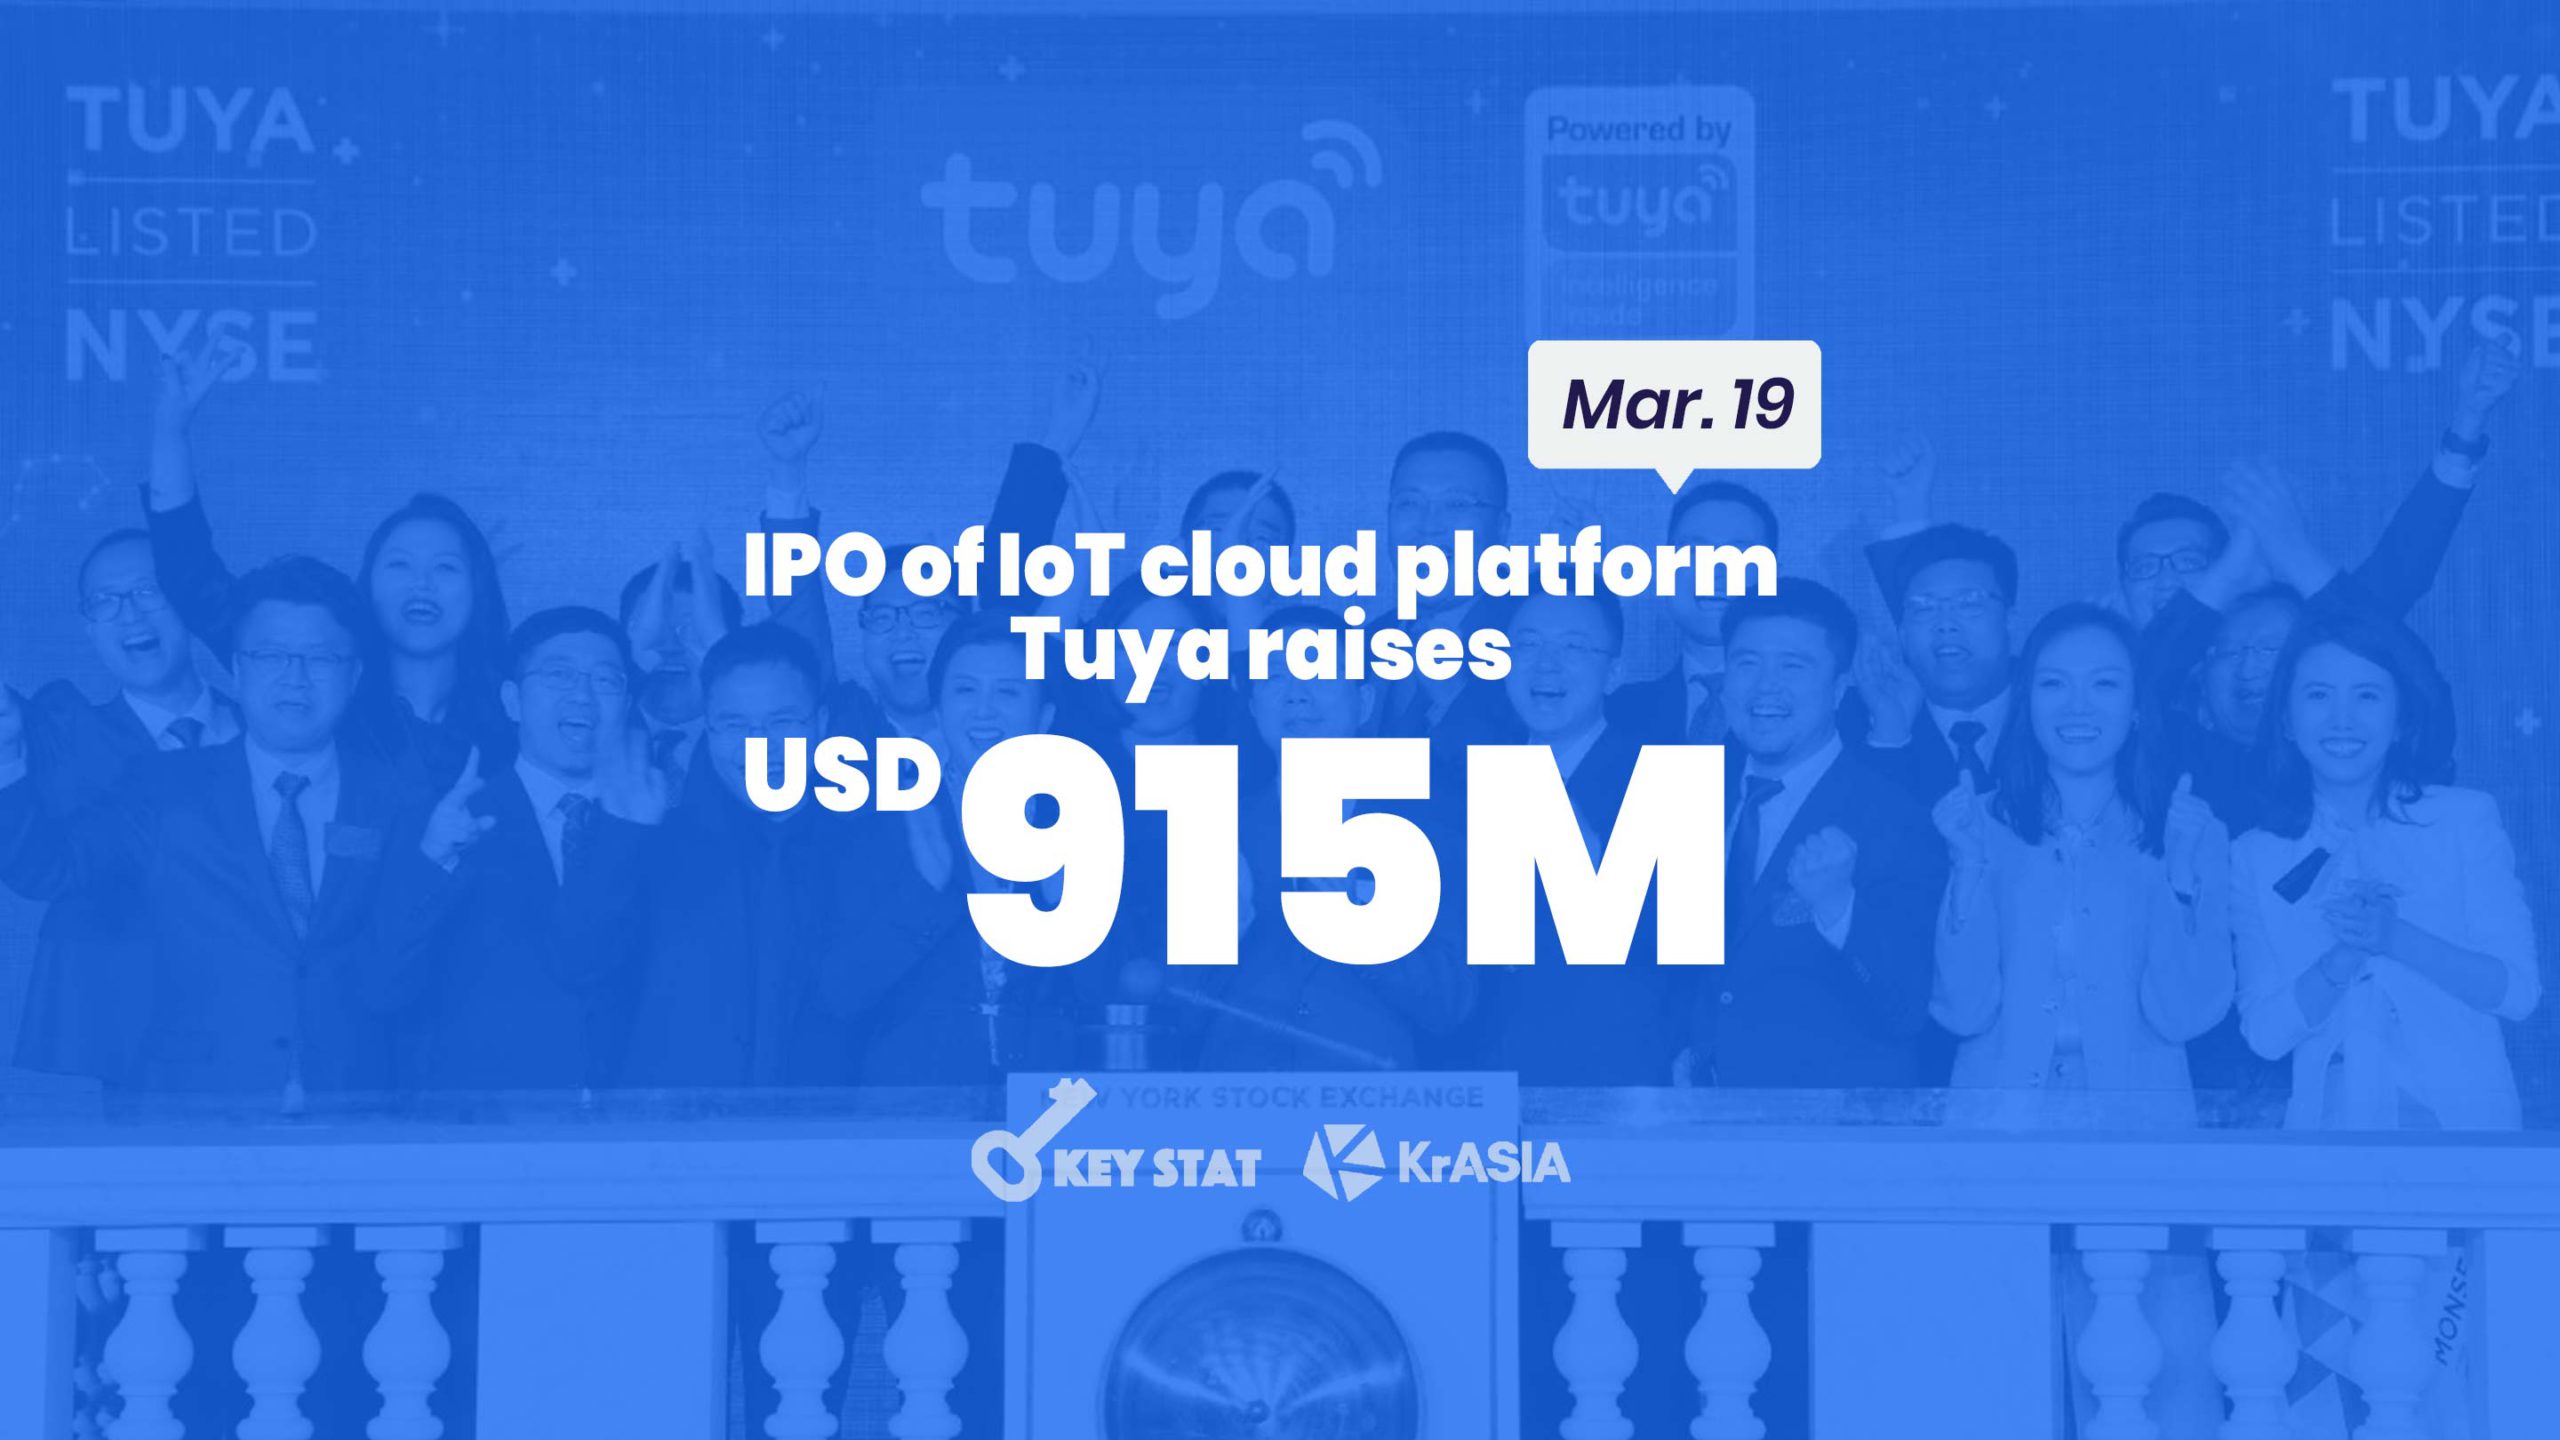 Tuya Smart - Global IoT Developer Service Provider